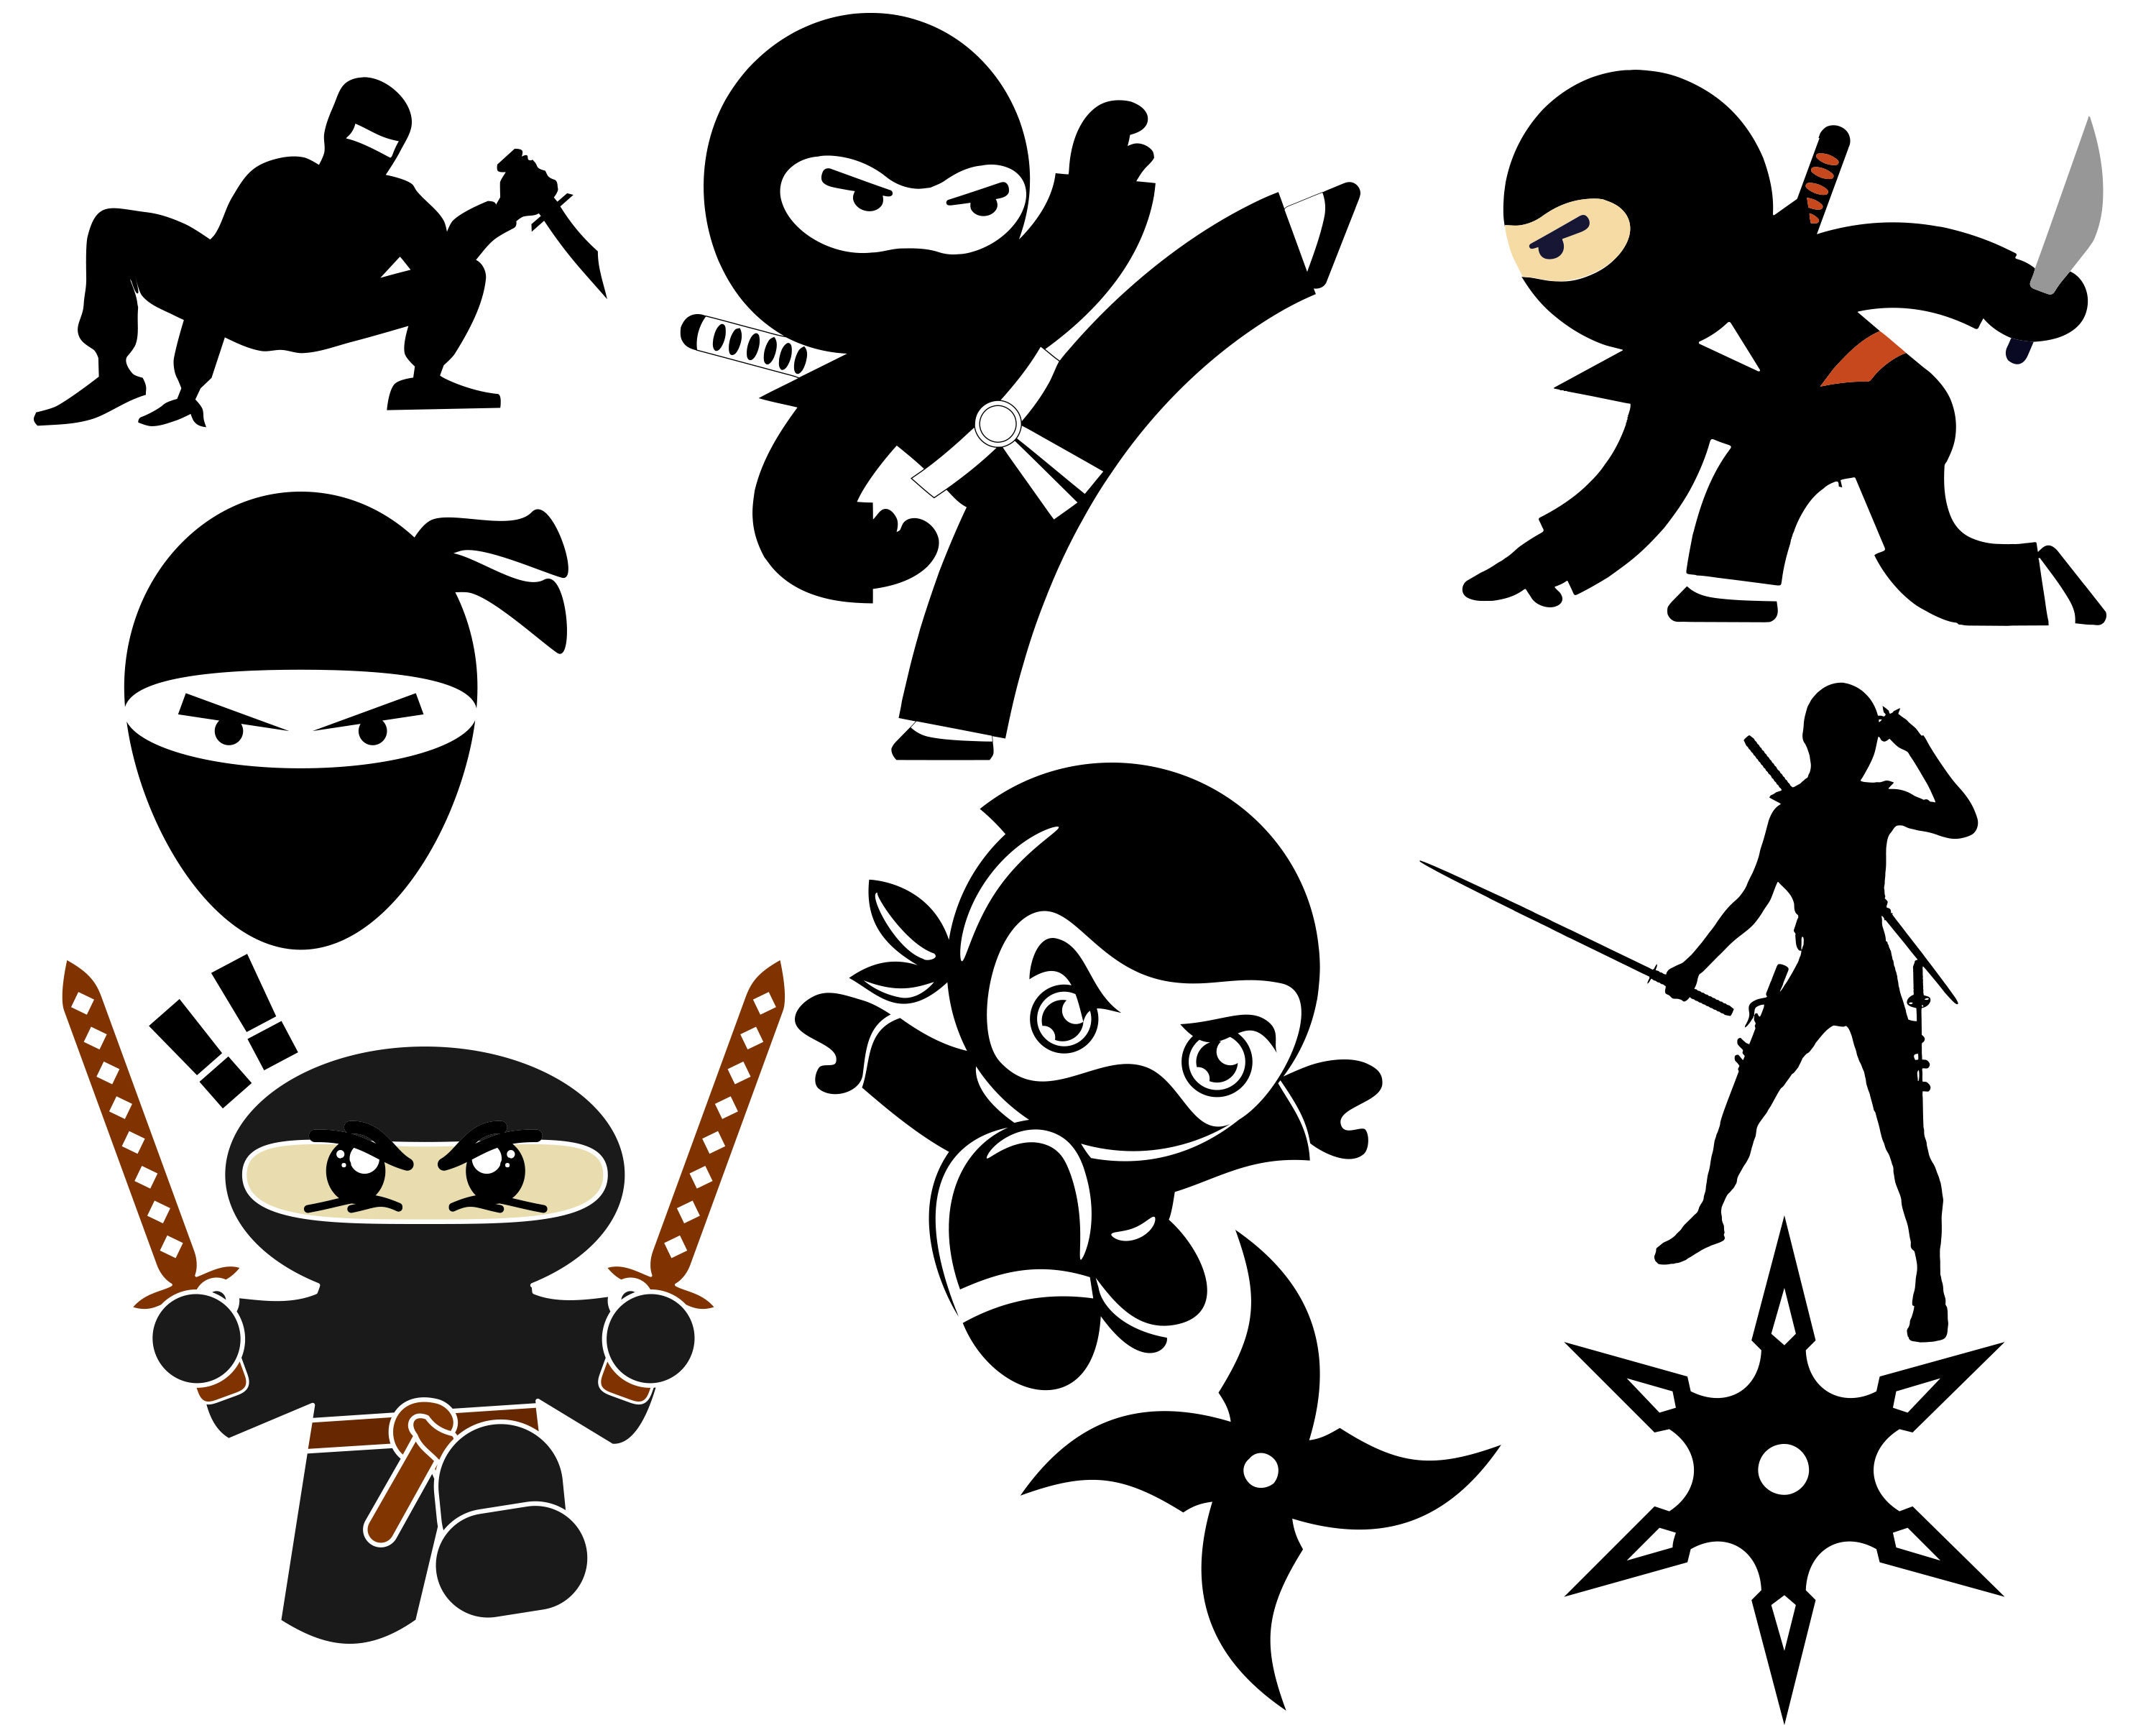 Ninja Kids Clip Art Set – Daily Art Hub // Graphics, Alphabets & SVG